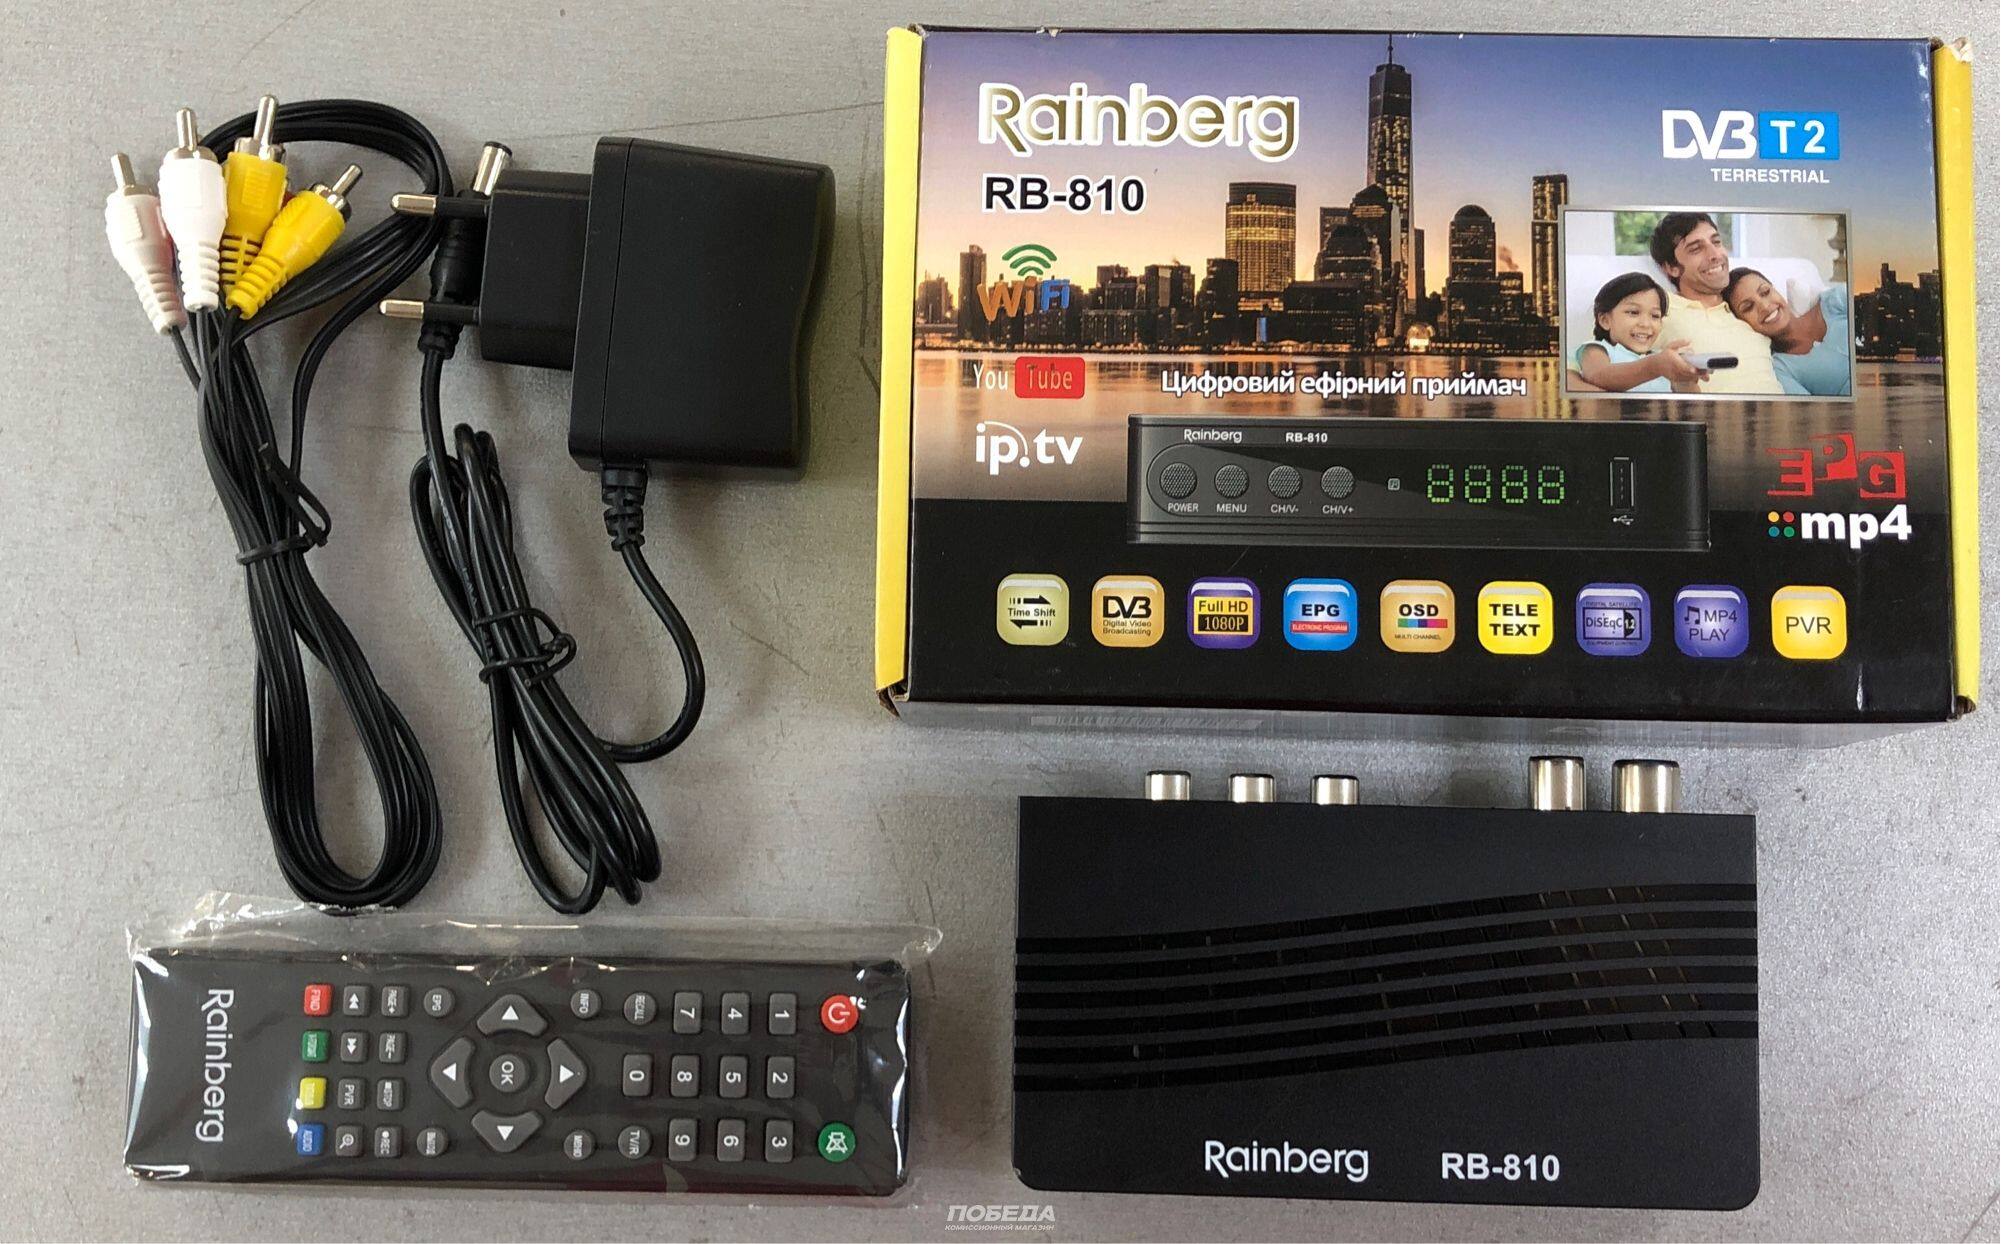 Rainberg Digital TV Receiver USB Media Player Decoder free AV Cable